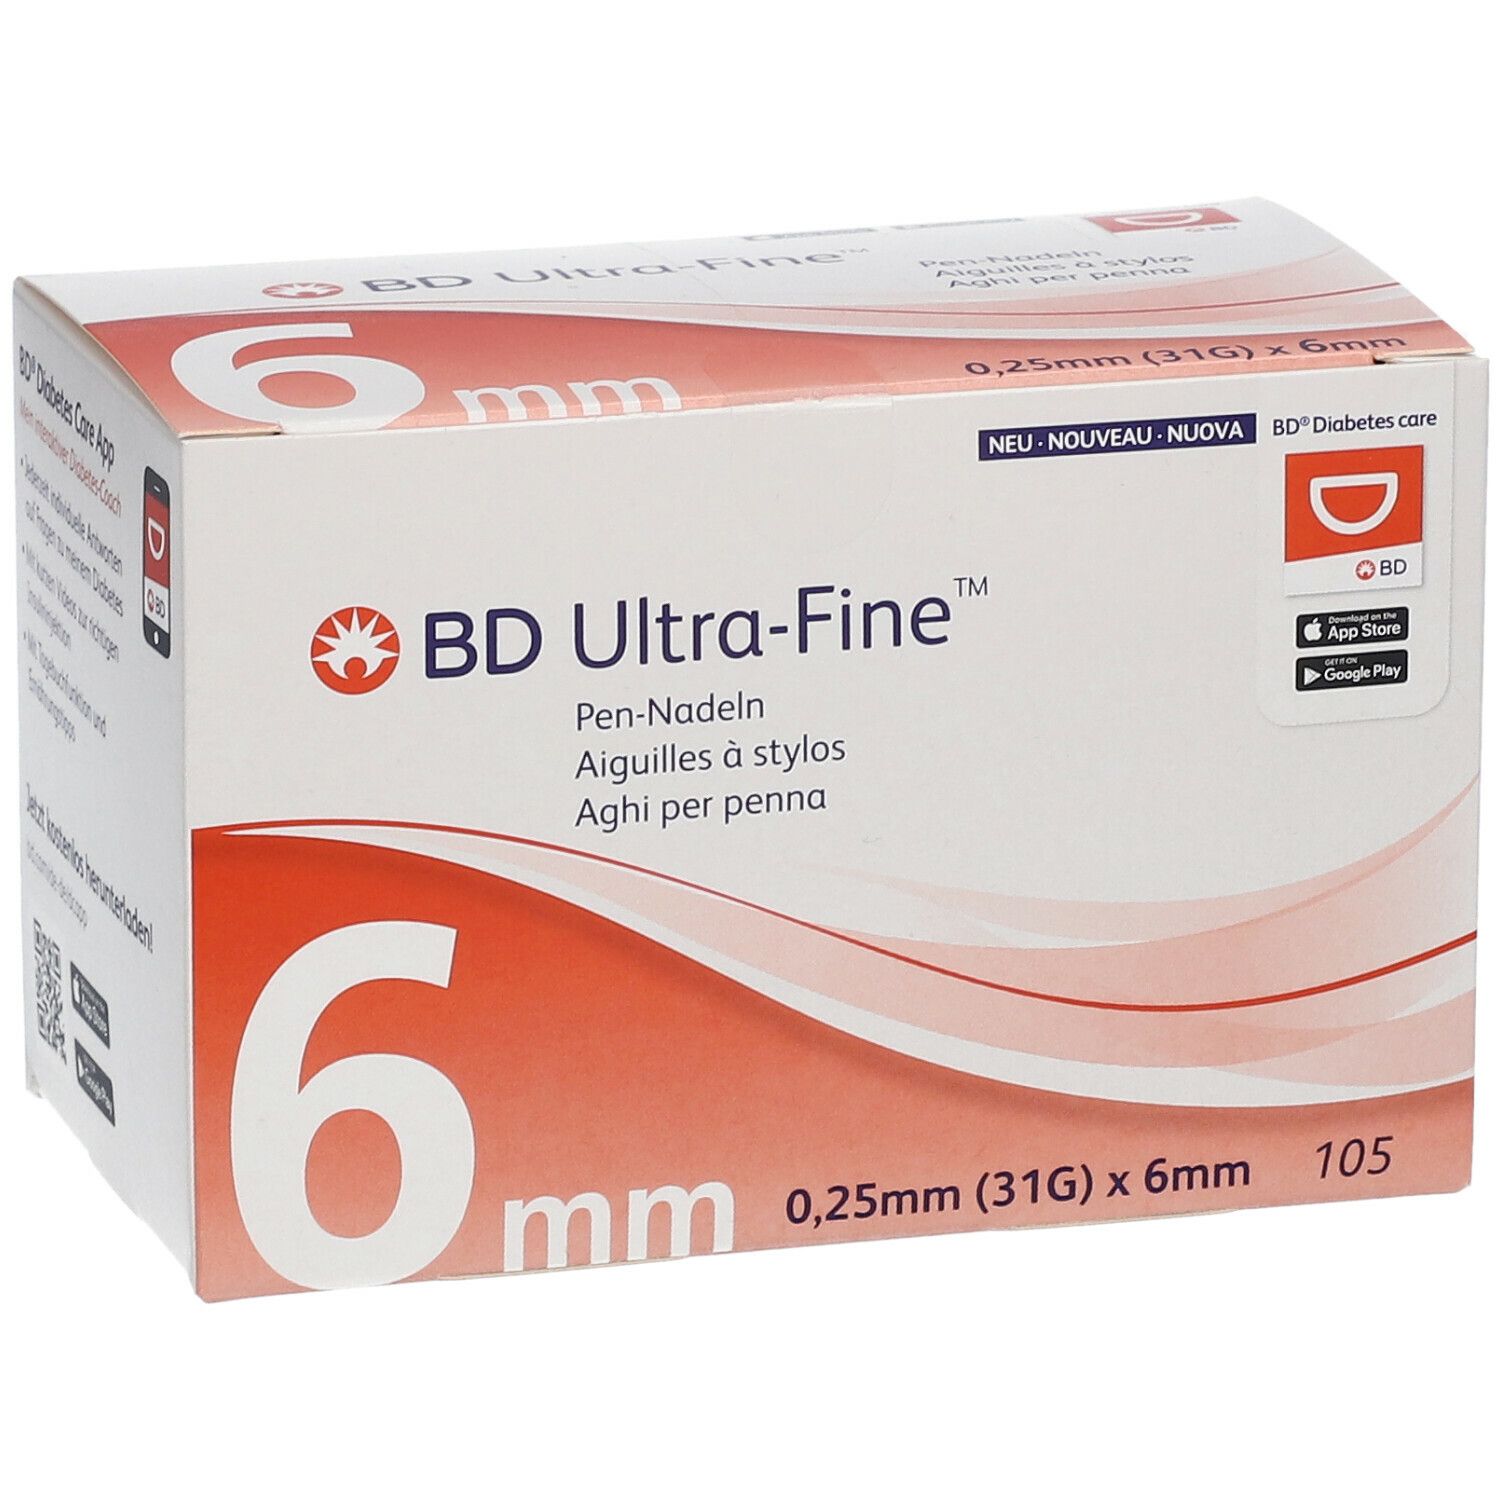 BD Micro-Fine Ultra™ 6 mm 31 G